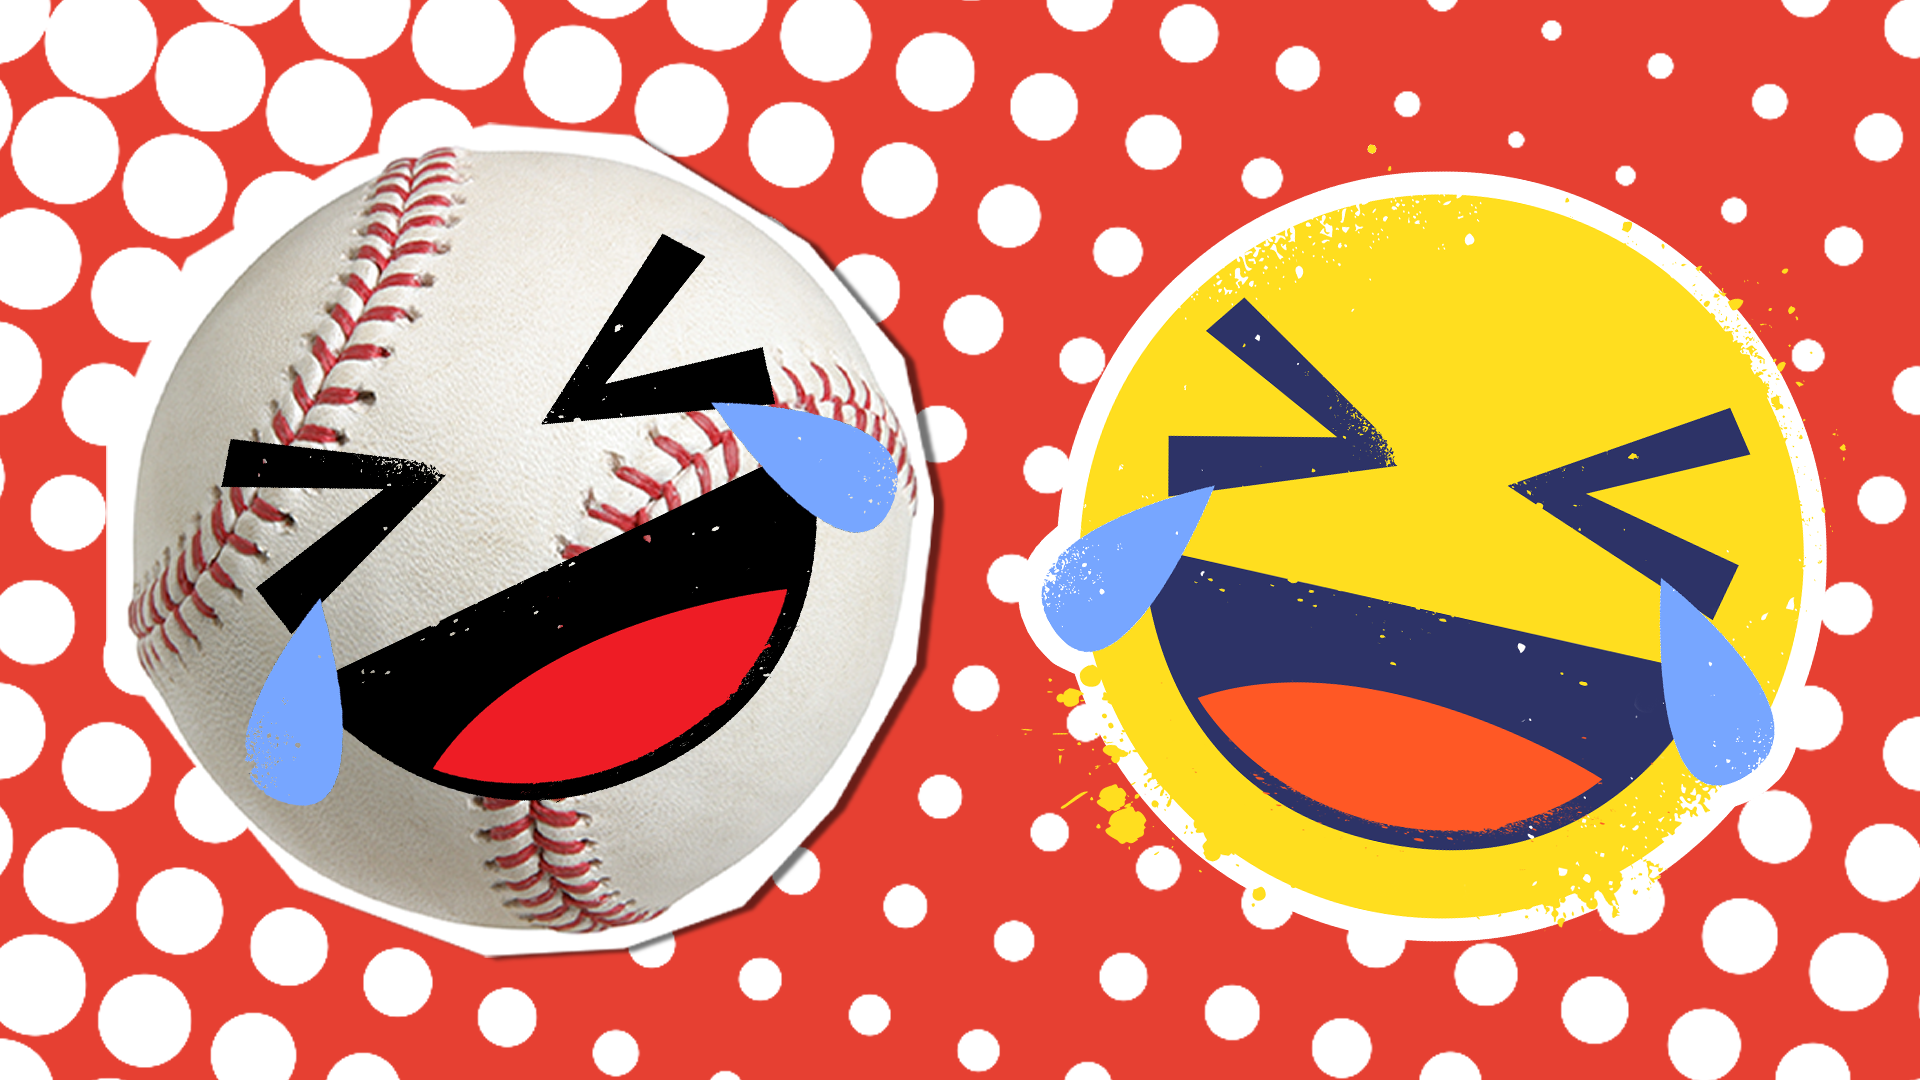 20 Baseball Jokes That You Should Take a Swing At! | Beano.com